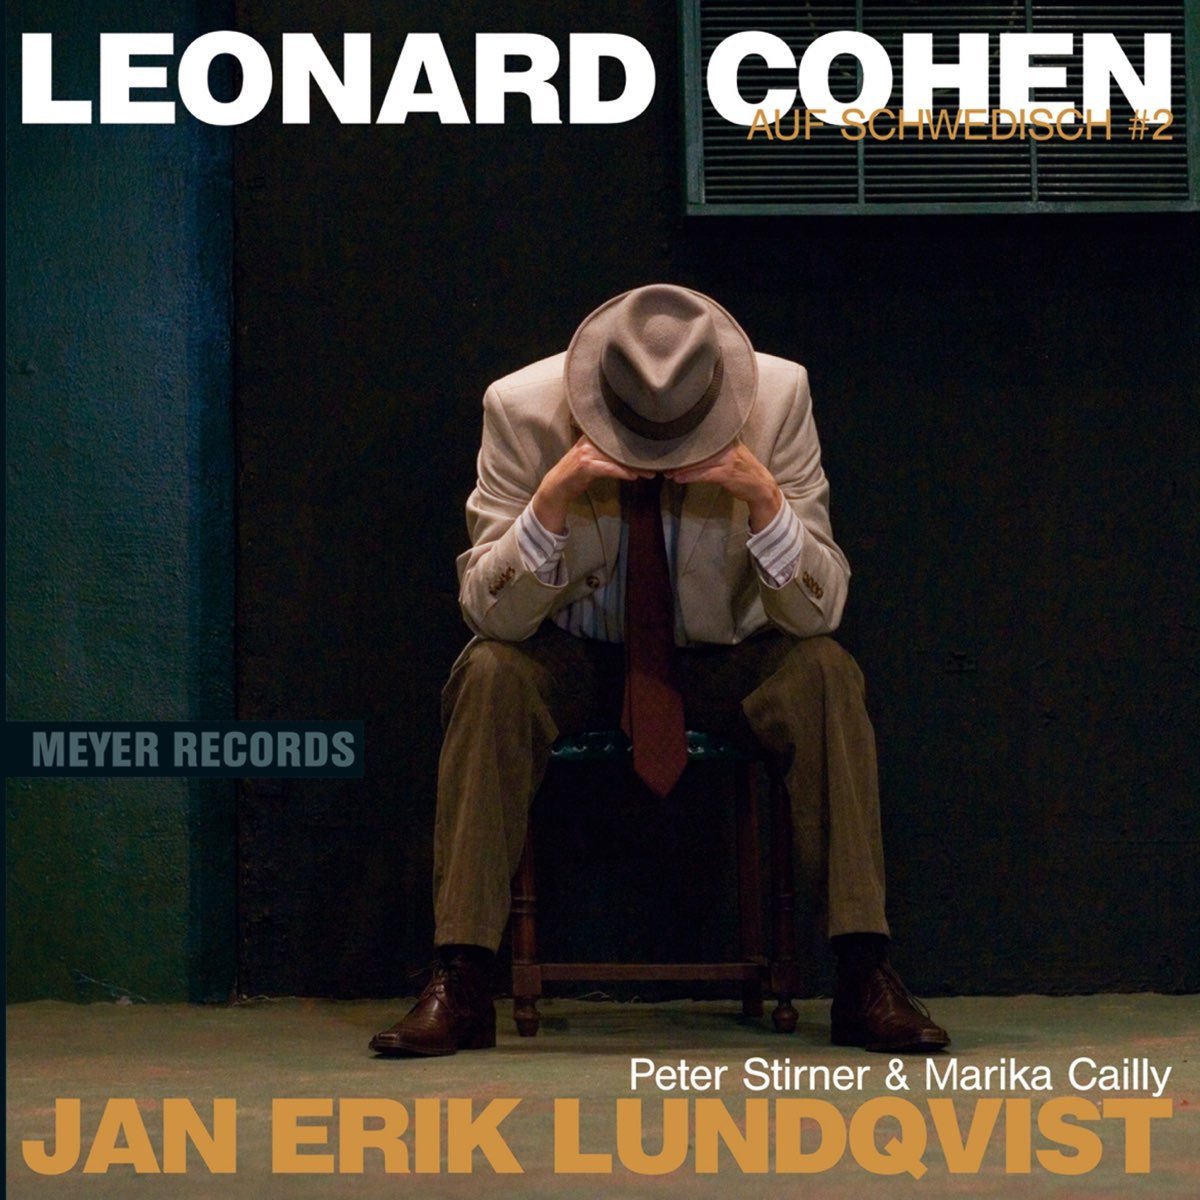 Тестовий компакт-диск Jan Erik Lundqvist – Leonard Cohen Auf Schwedisch #2 (Meyer rec. no.148)